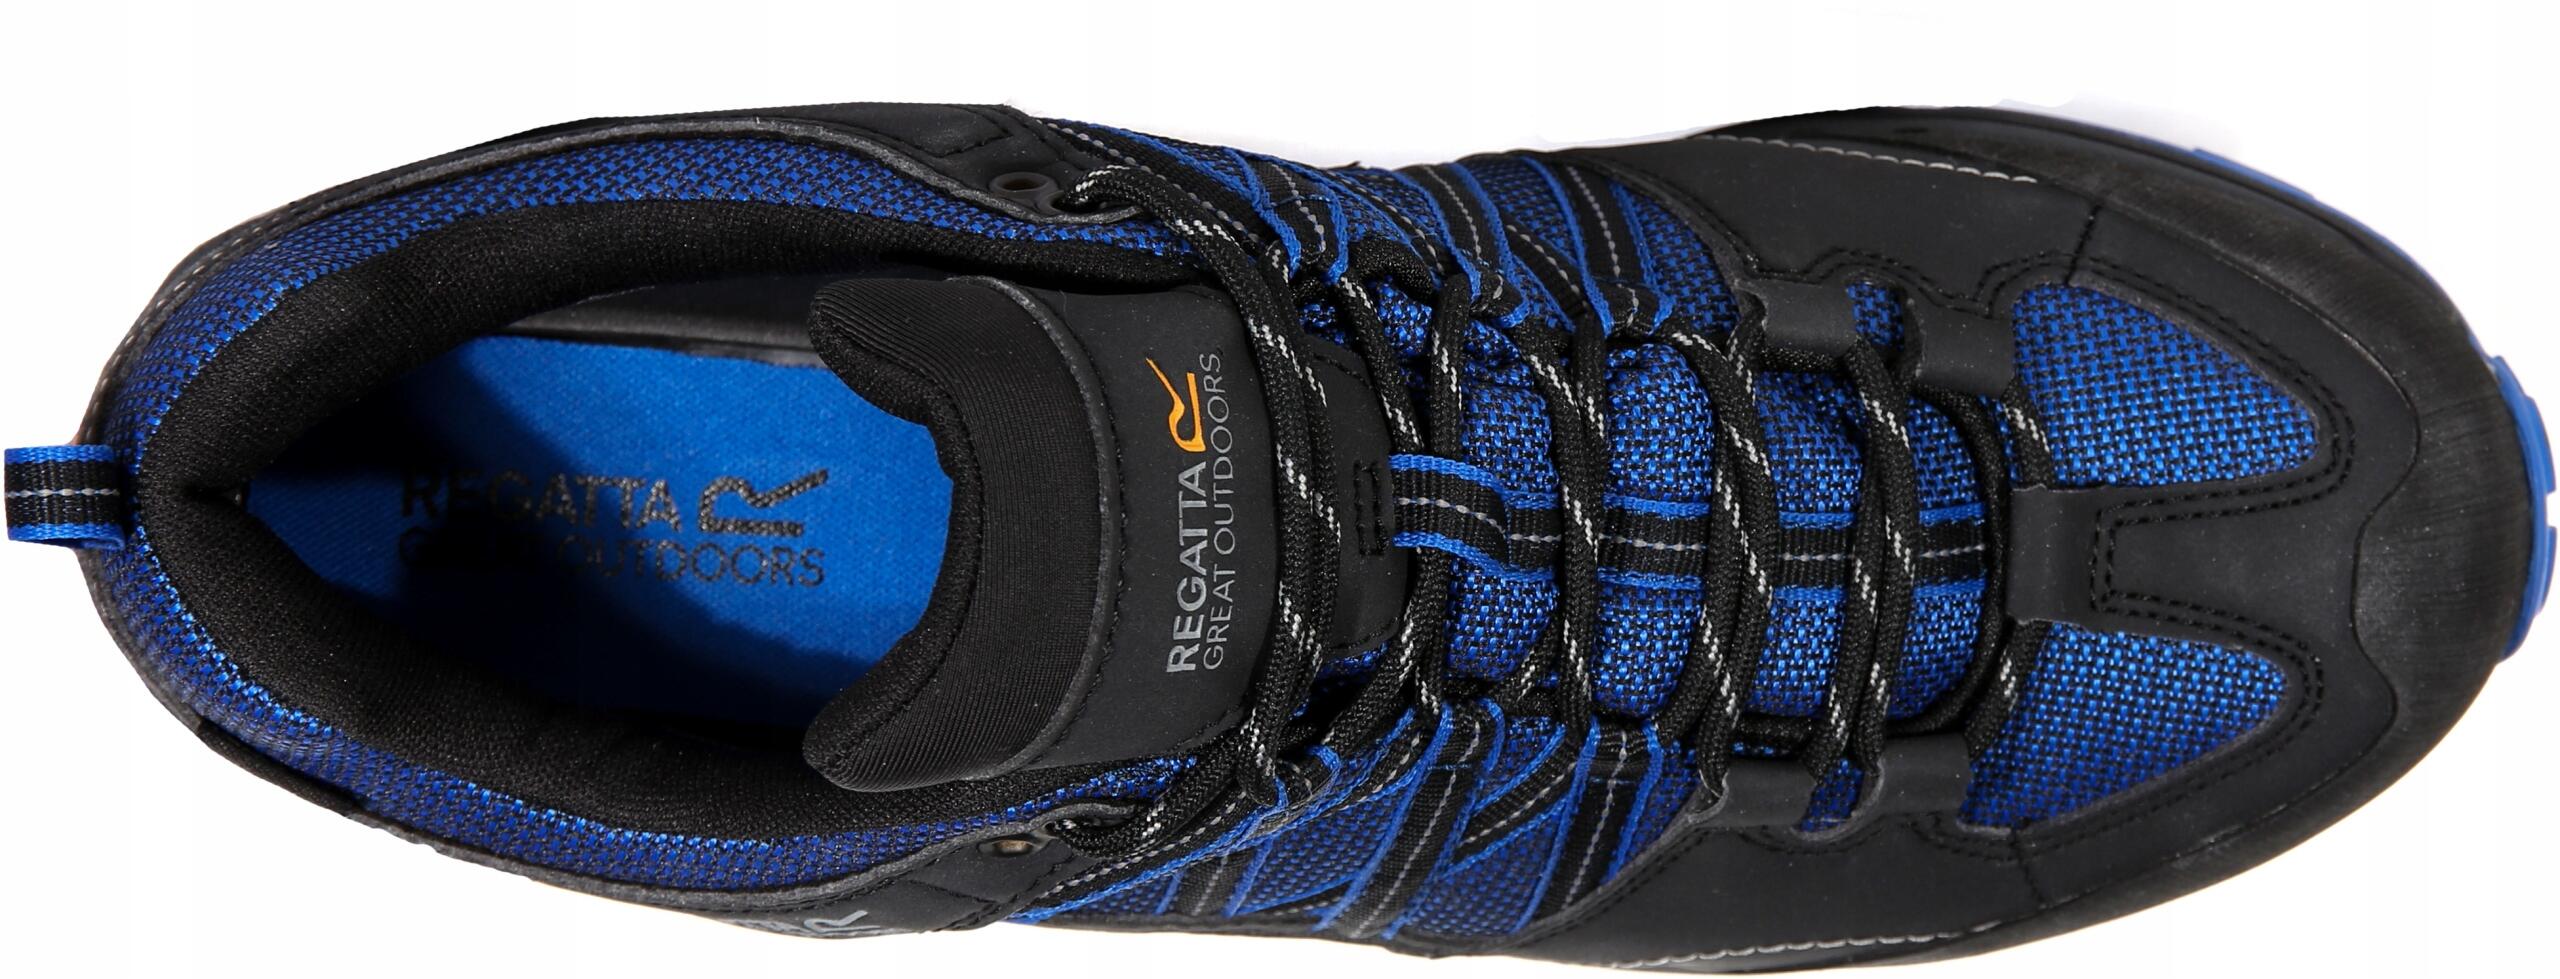 Samaris II Men's Hiking Shoes - Mid Blue/Ash 6/6